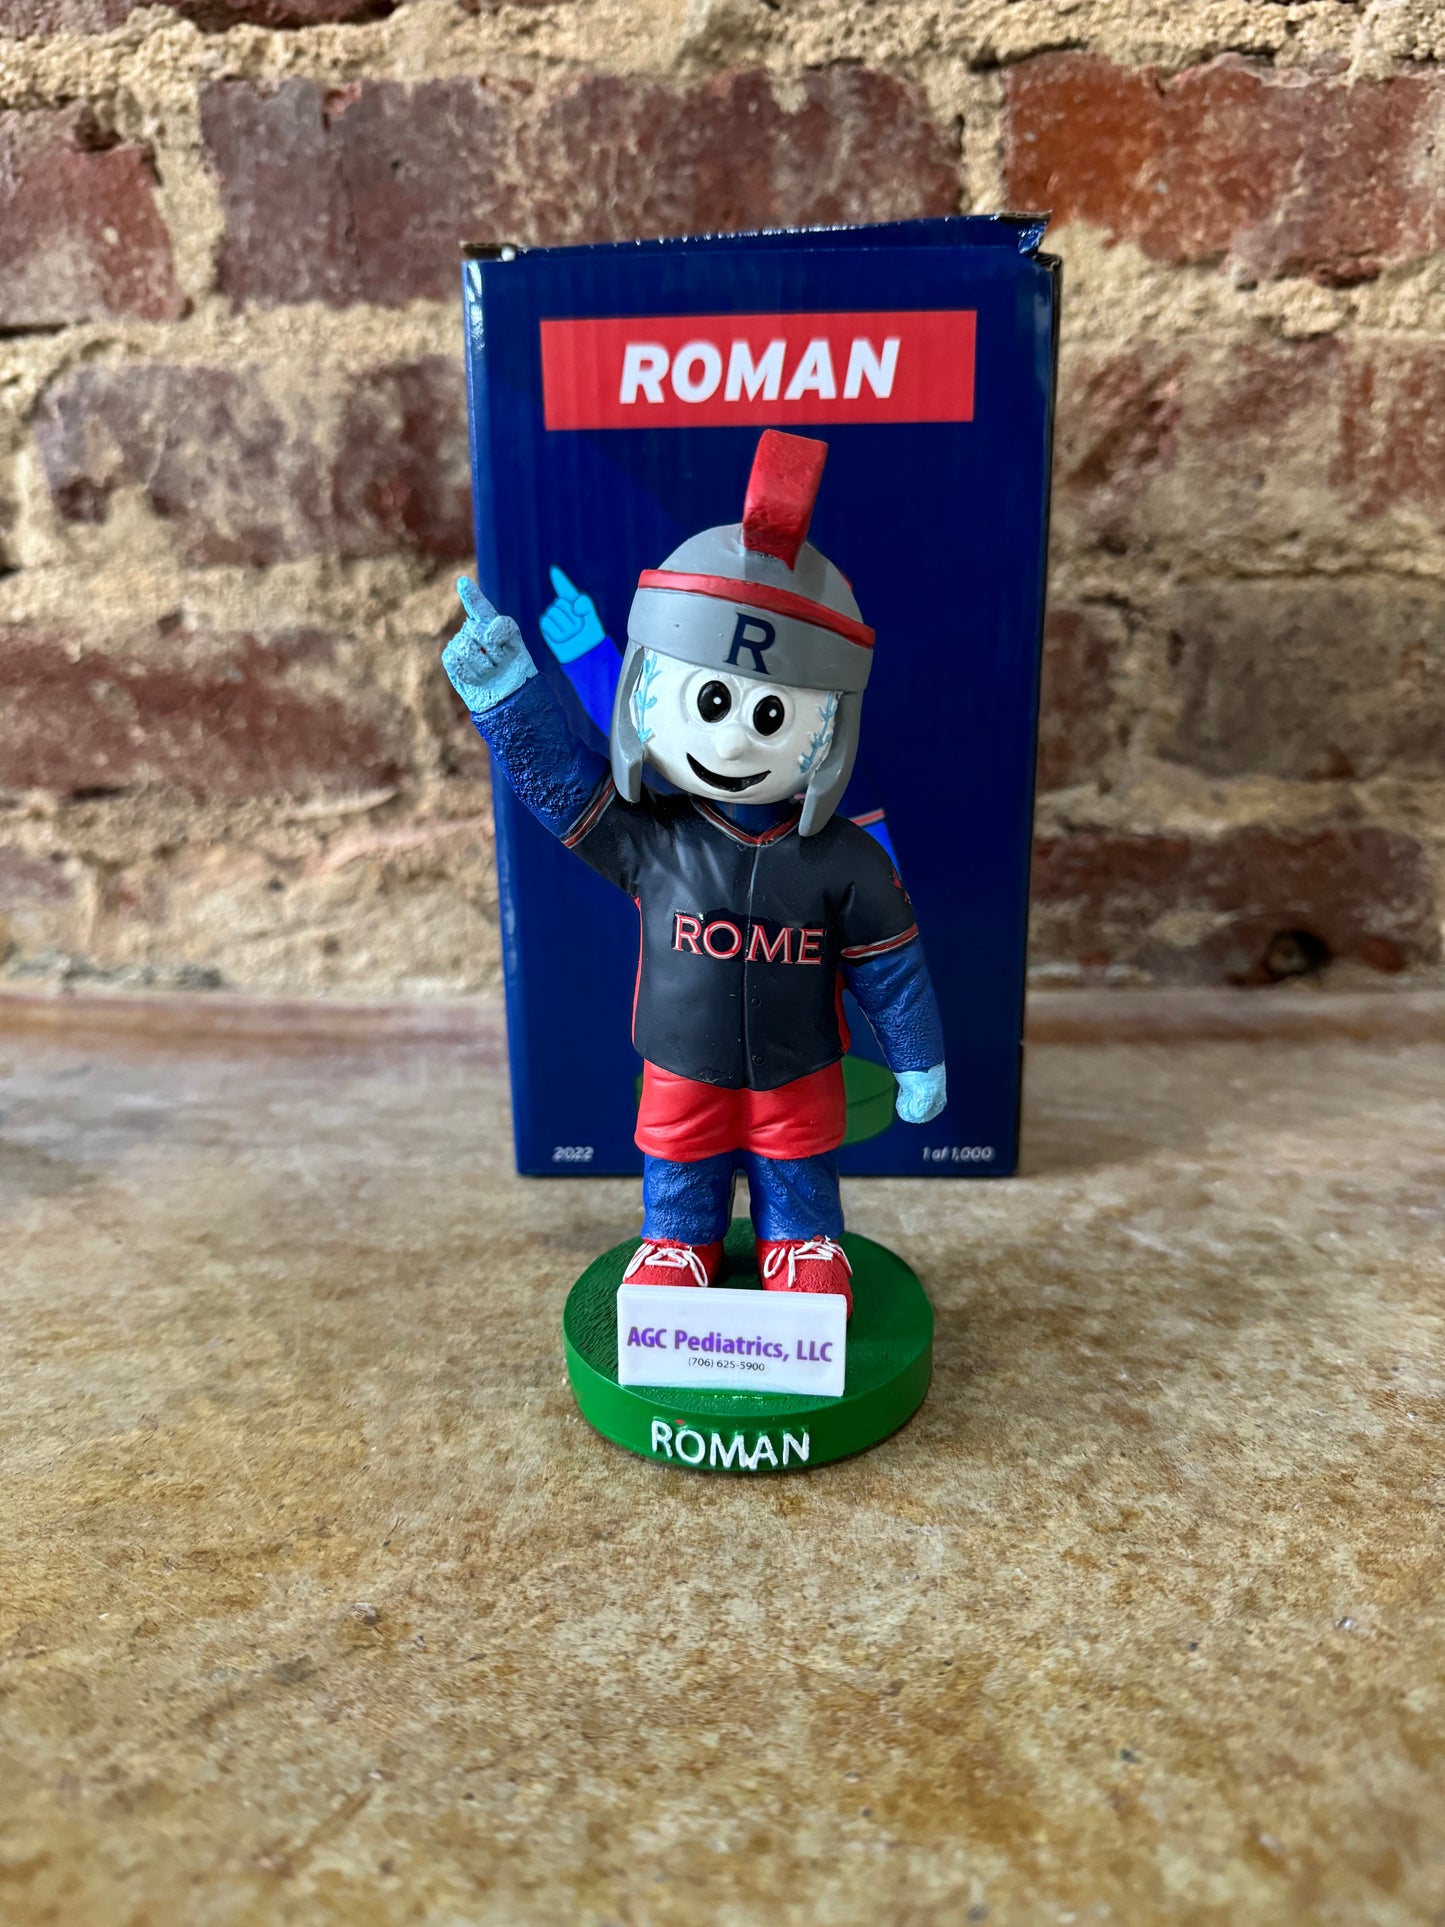 Roman Mascot Bobblehead 4/30/22